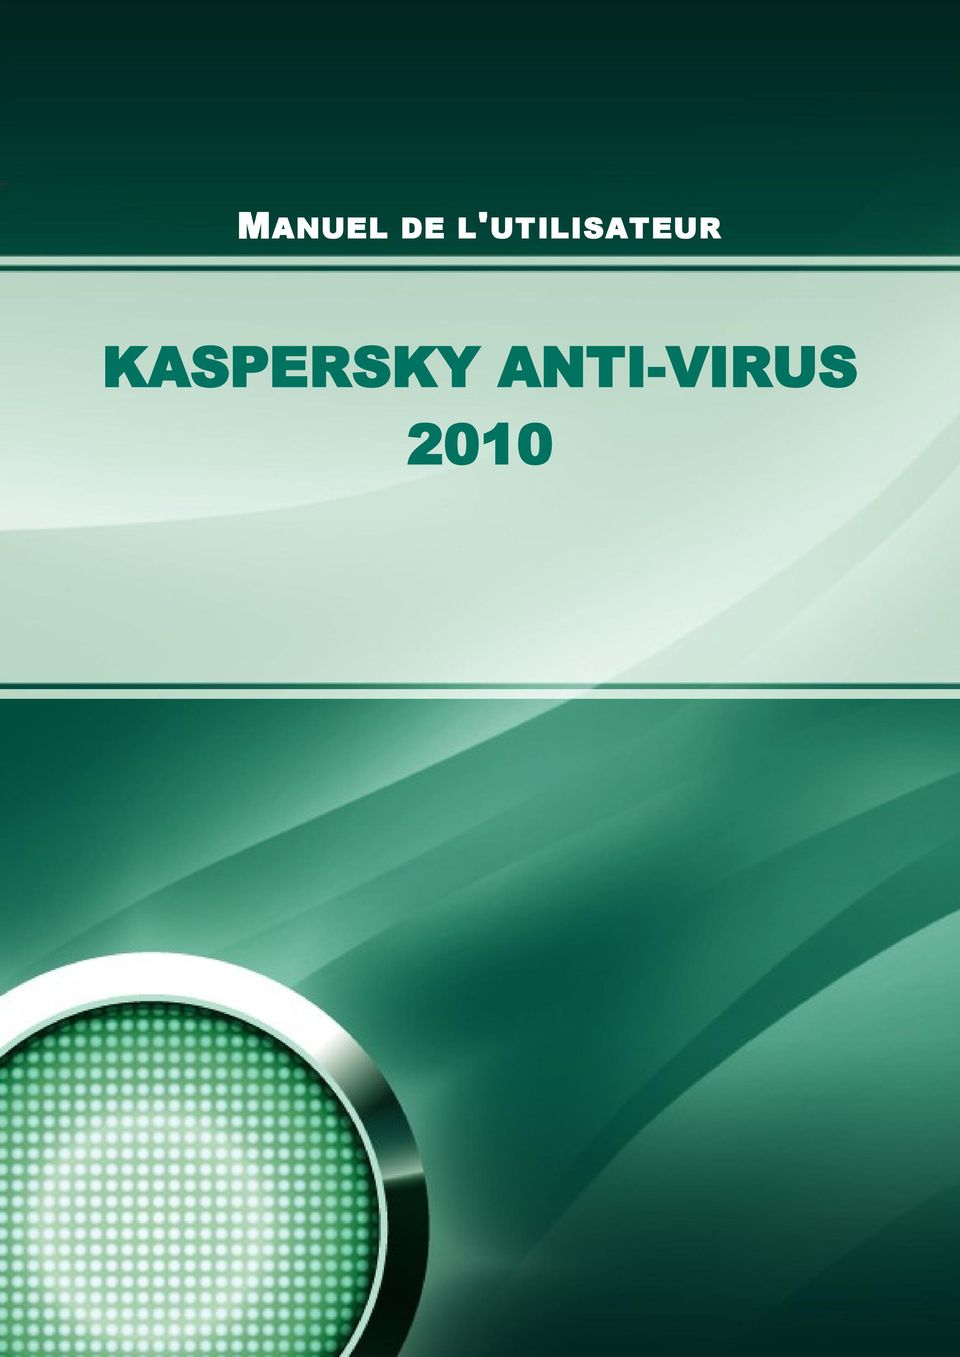 MANUEL DE L'UTILISATEUR KASPERSKY ANTI-VIRUS PDF Free Download